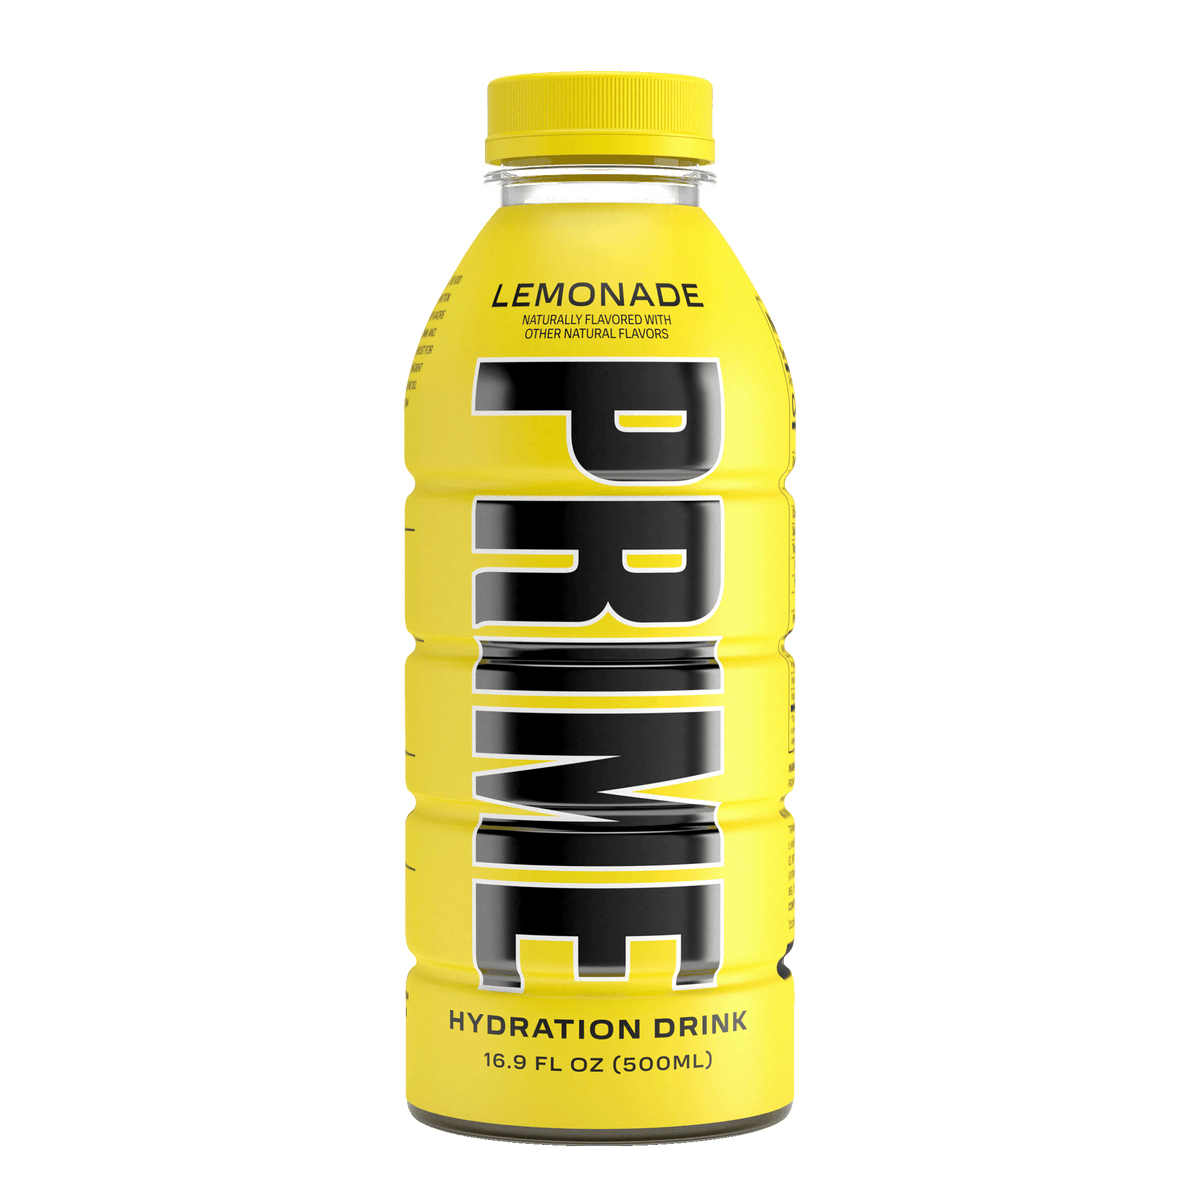 Prime Hydration Blue Raspberry Sports Drink - 16.9 fl oz Bottle